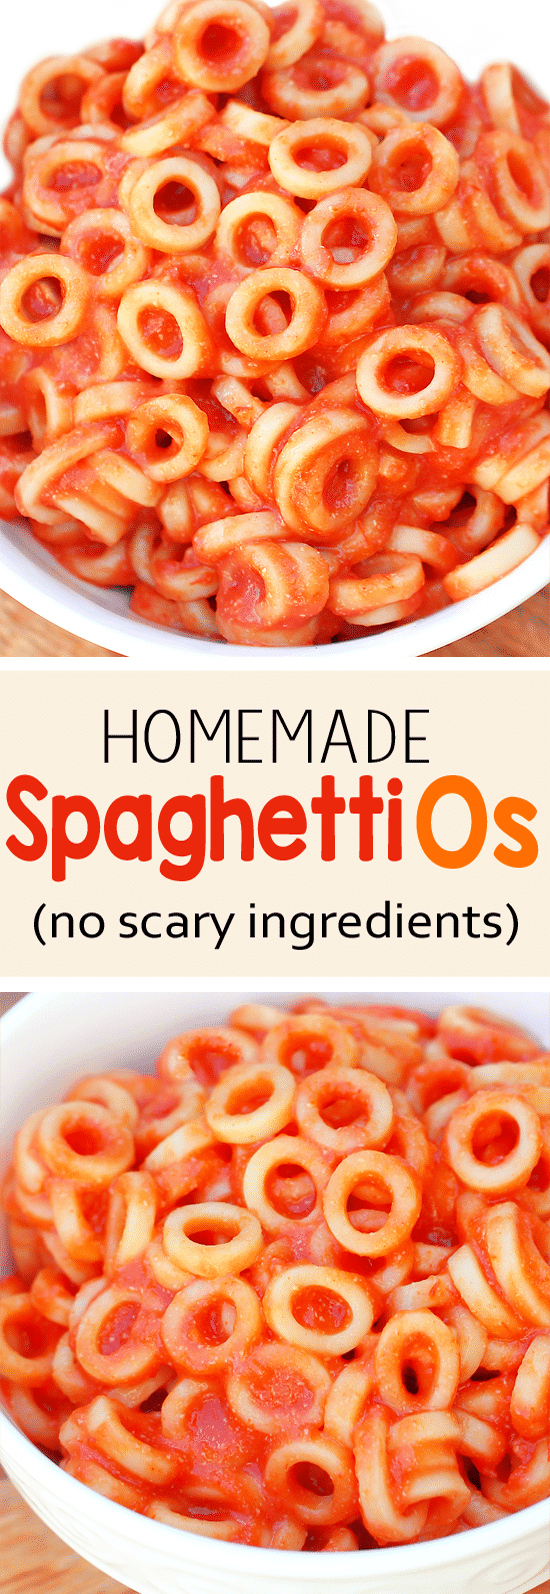 Kid Friendly Healthy Homemade Spaghetti Os Recipe